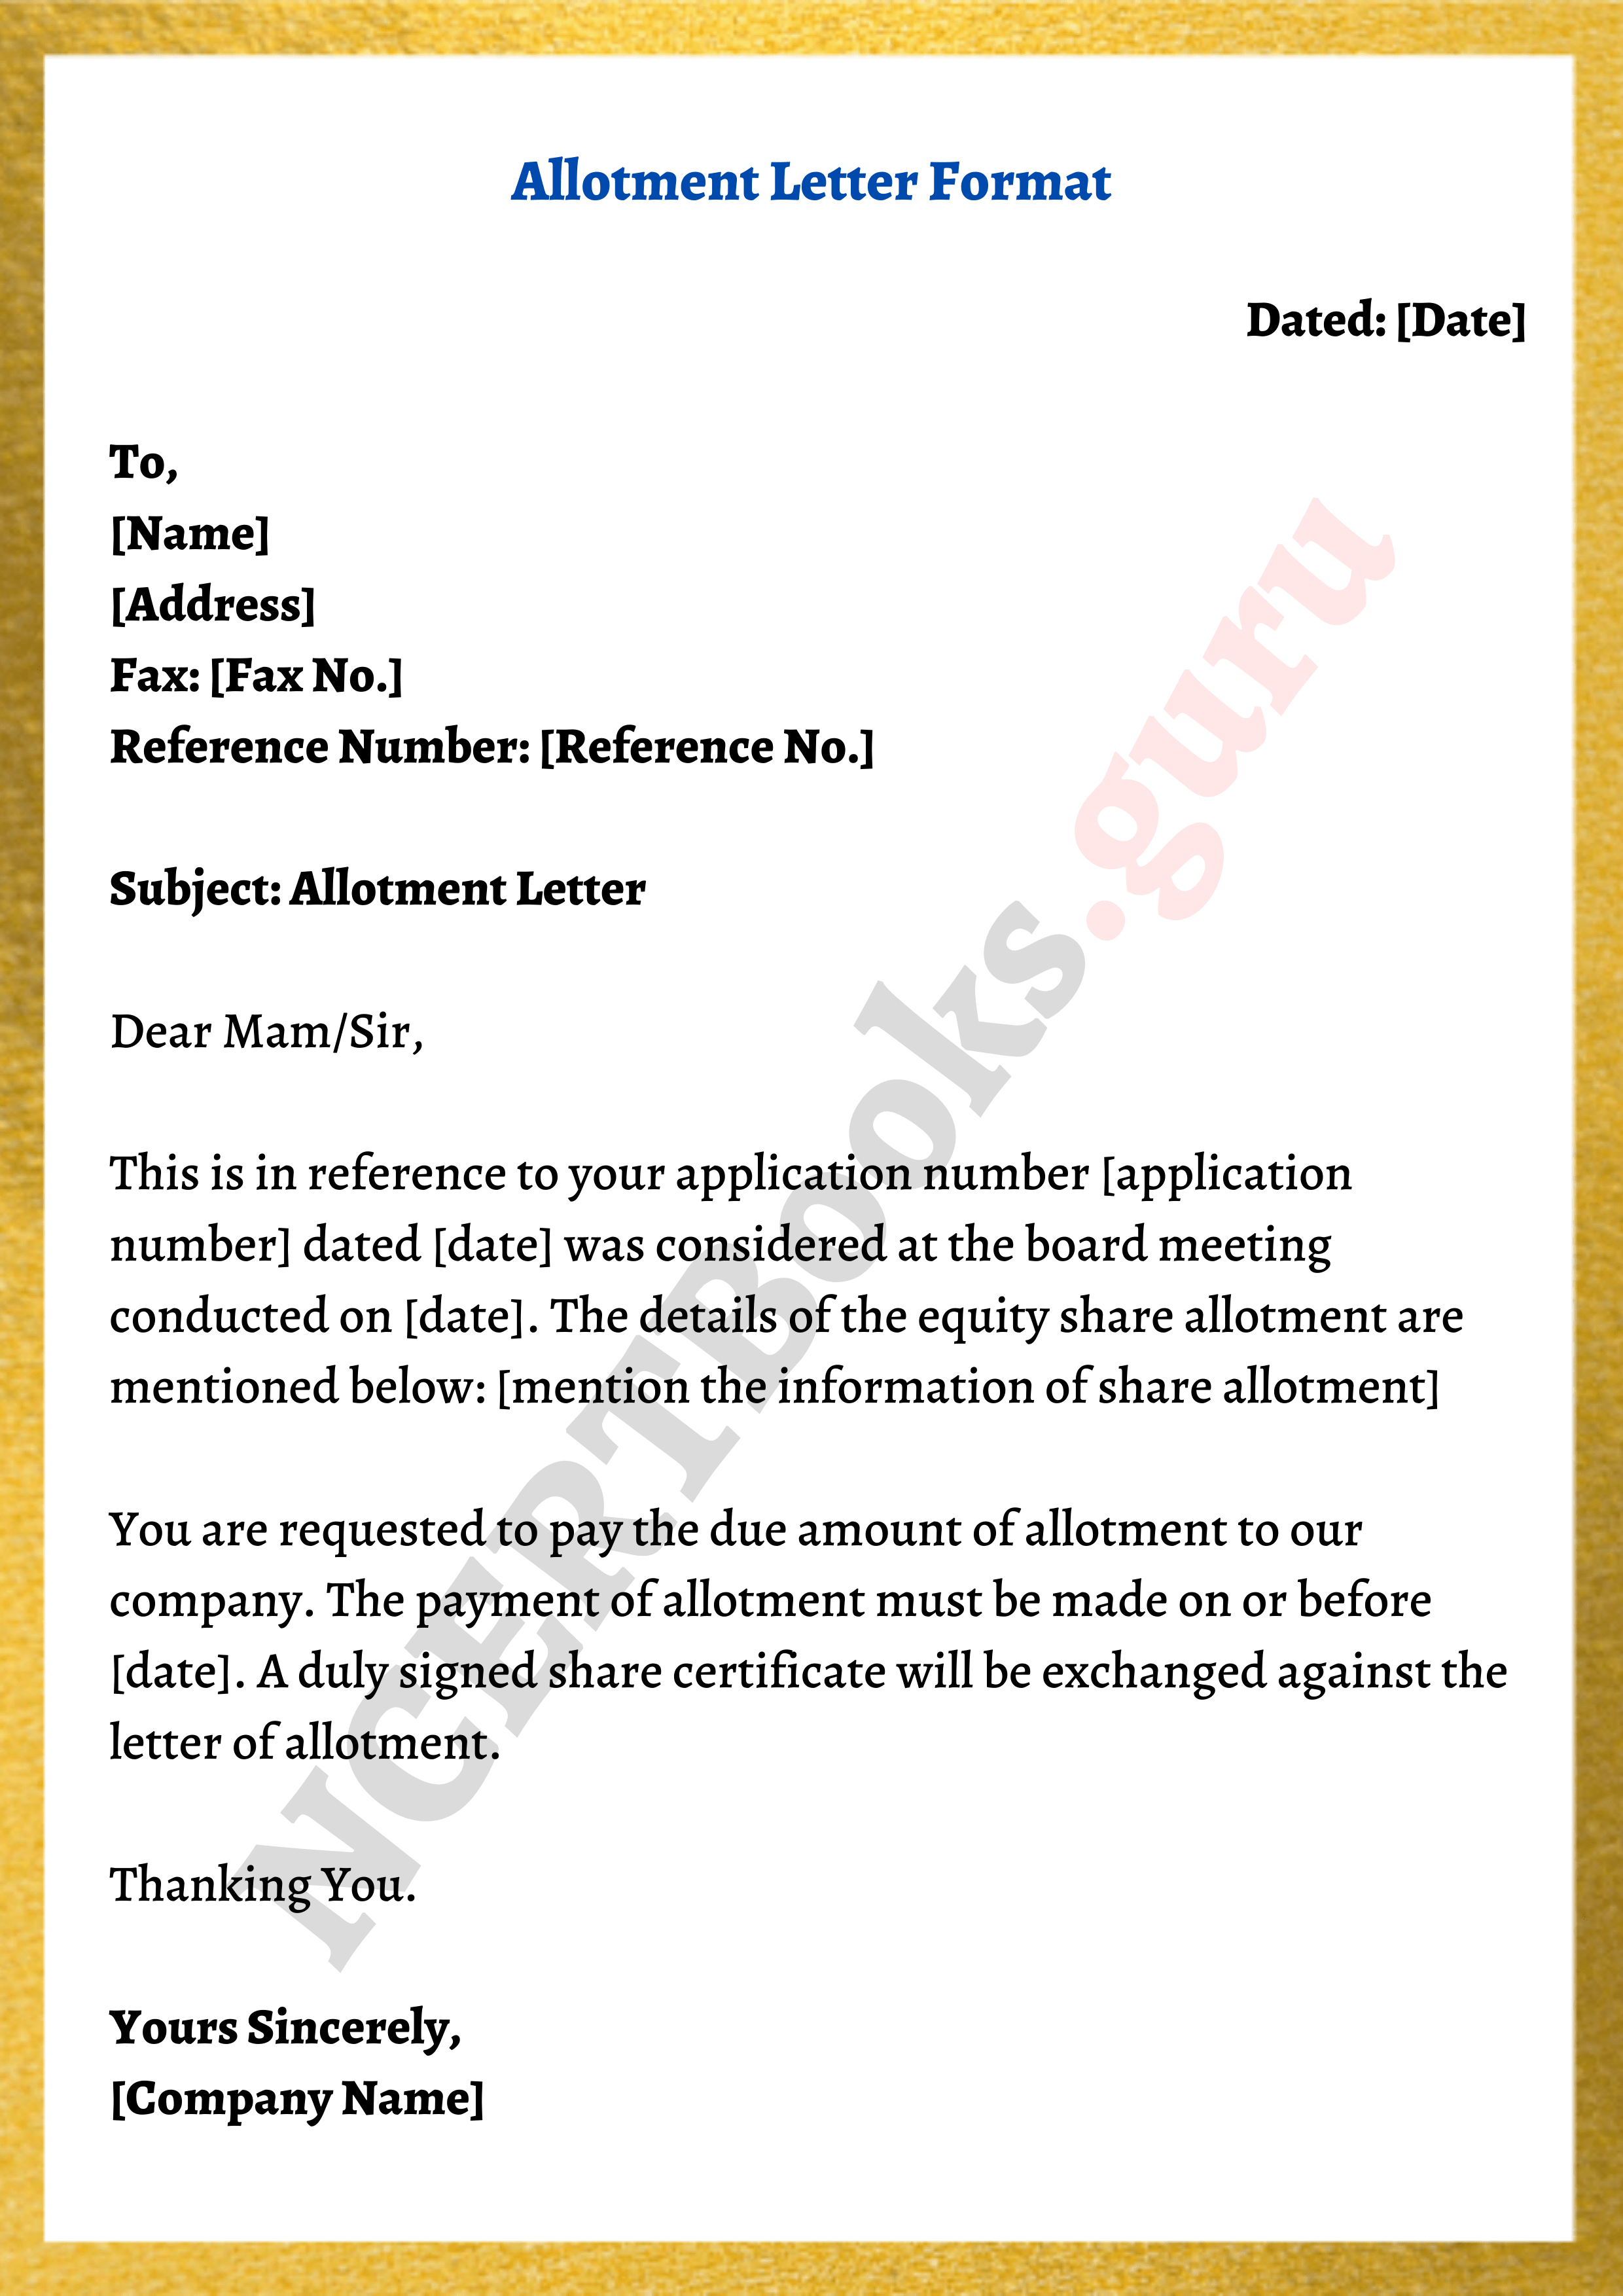 format of Allotment Letter